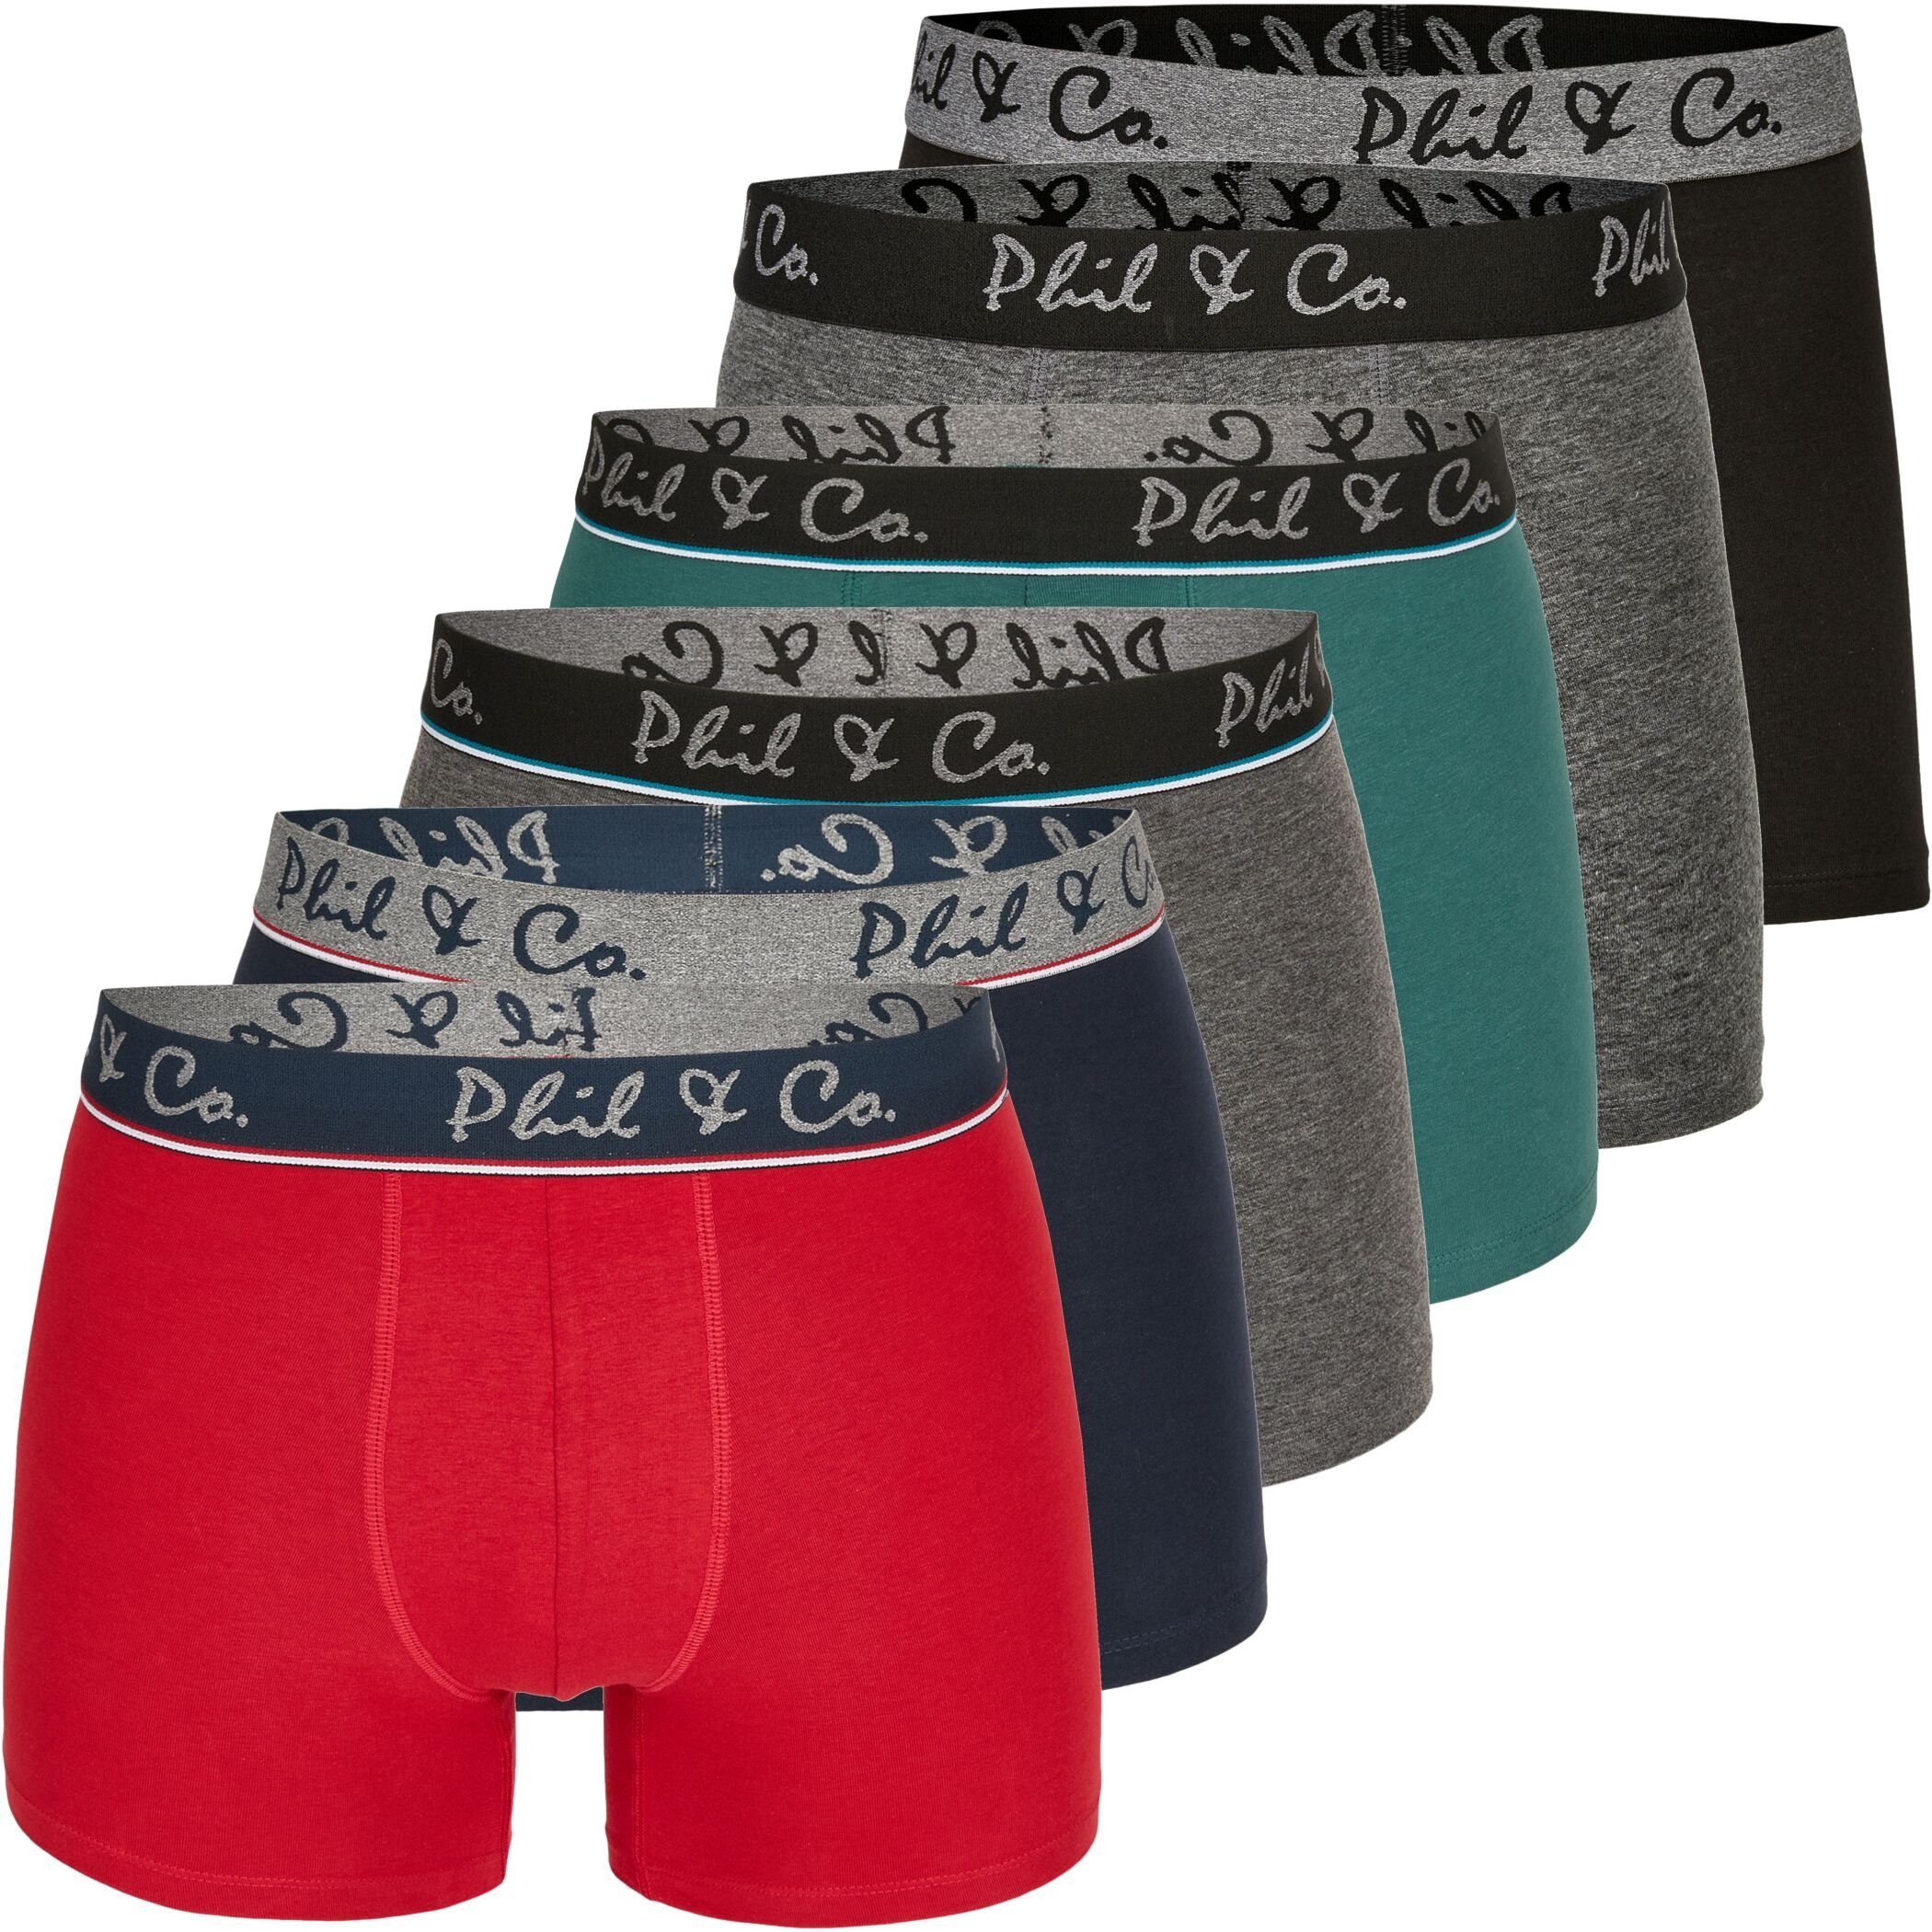 Phil & Co. Boxershorts 6er Pack Phil & Co Berlin Jersey Boxershorts Trunk Short Pant FARBWAHL (1-St) DESIGN 24